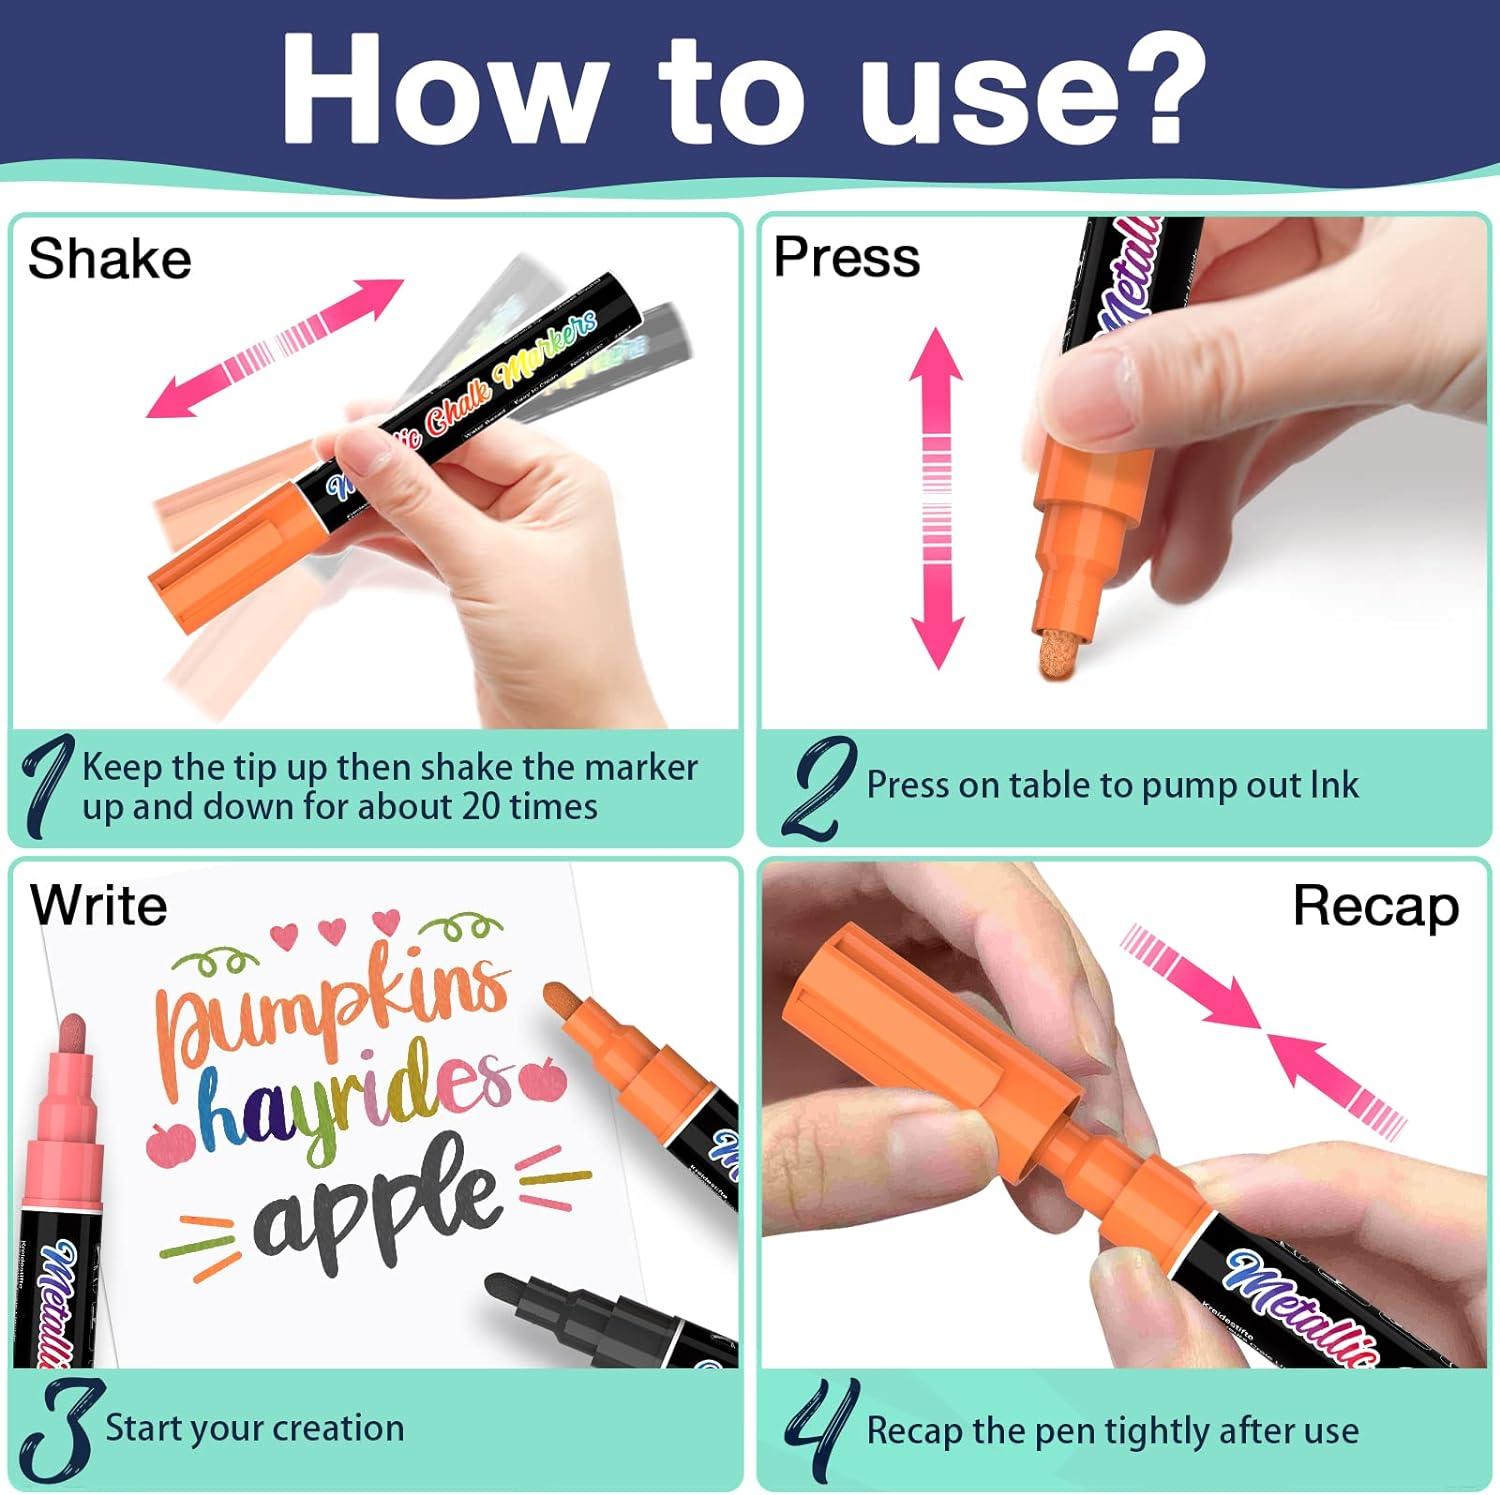 Bold Chalk Markers - Dry Erase Marker Pens - Liquid Chalk Markers for  Chalkboards, Signs, Windows, Blackboard, Glass - Reversible Tip (20 Pack) -  24